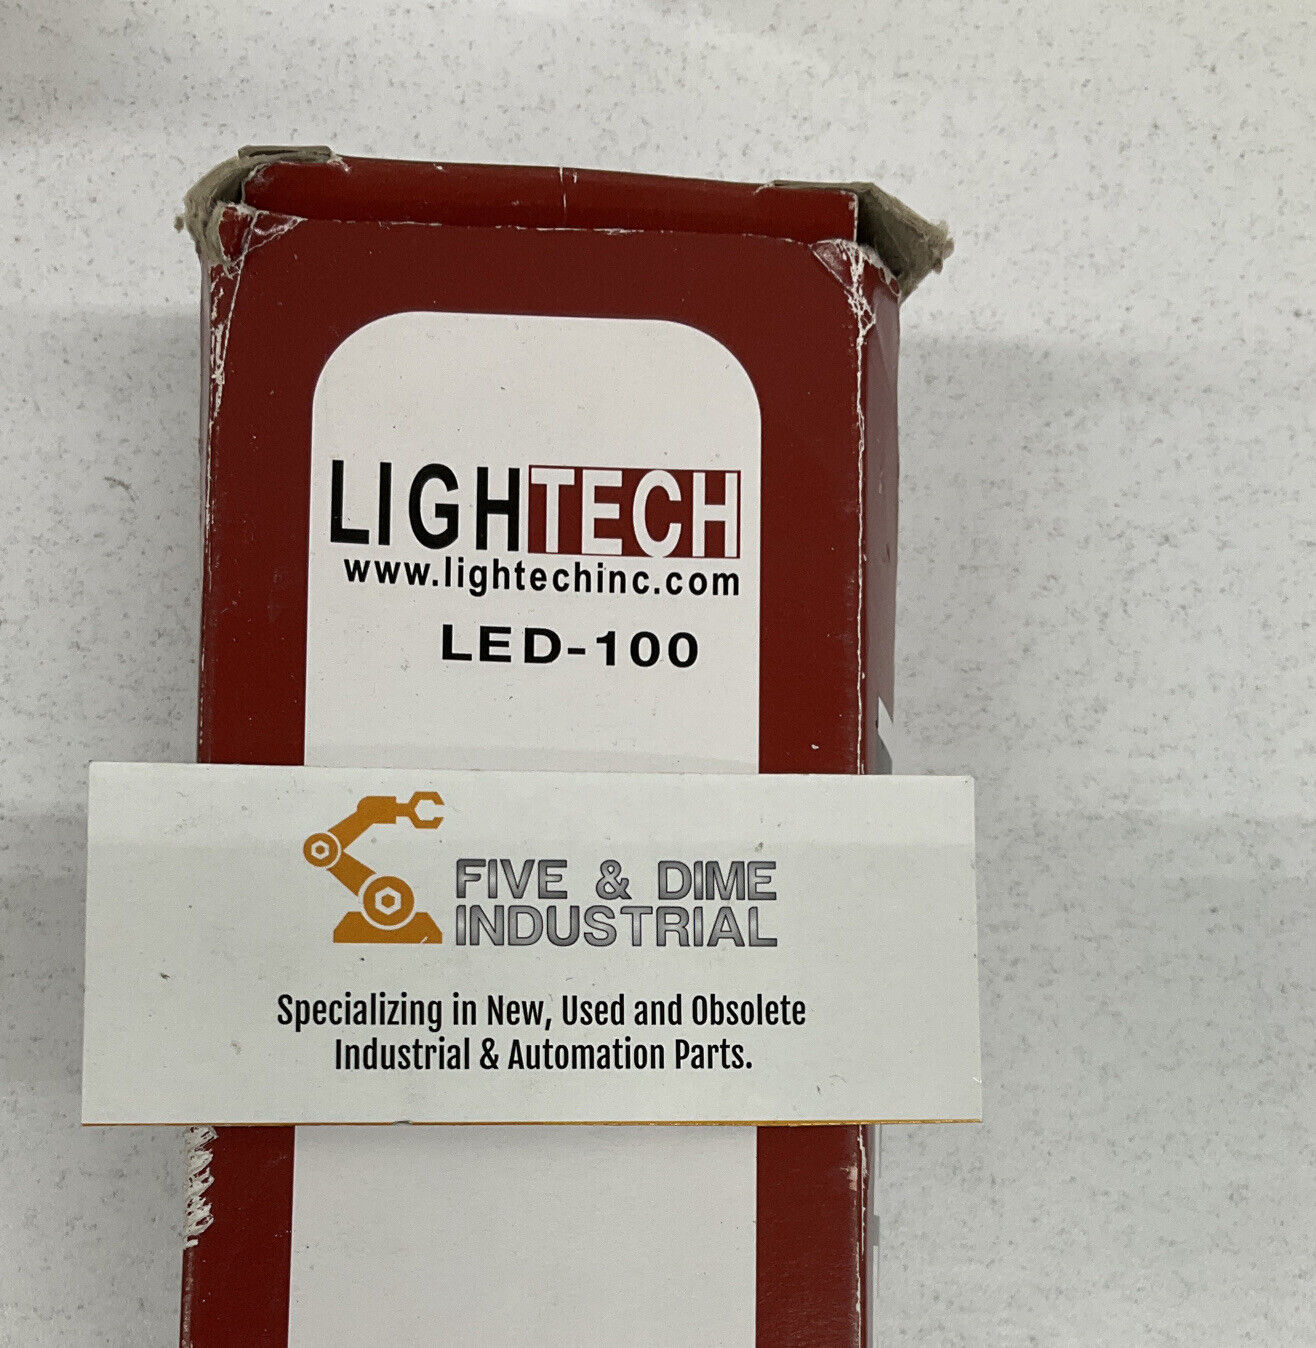 Lightech LED-100 Input 240V Output 12V Transformer  (RE254)